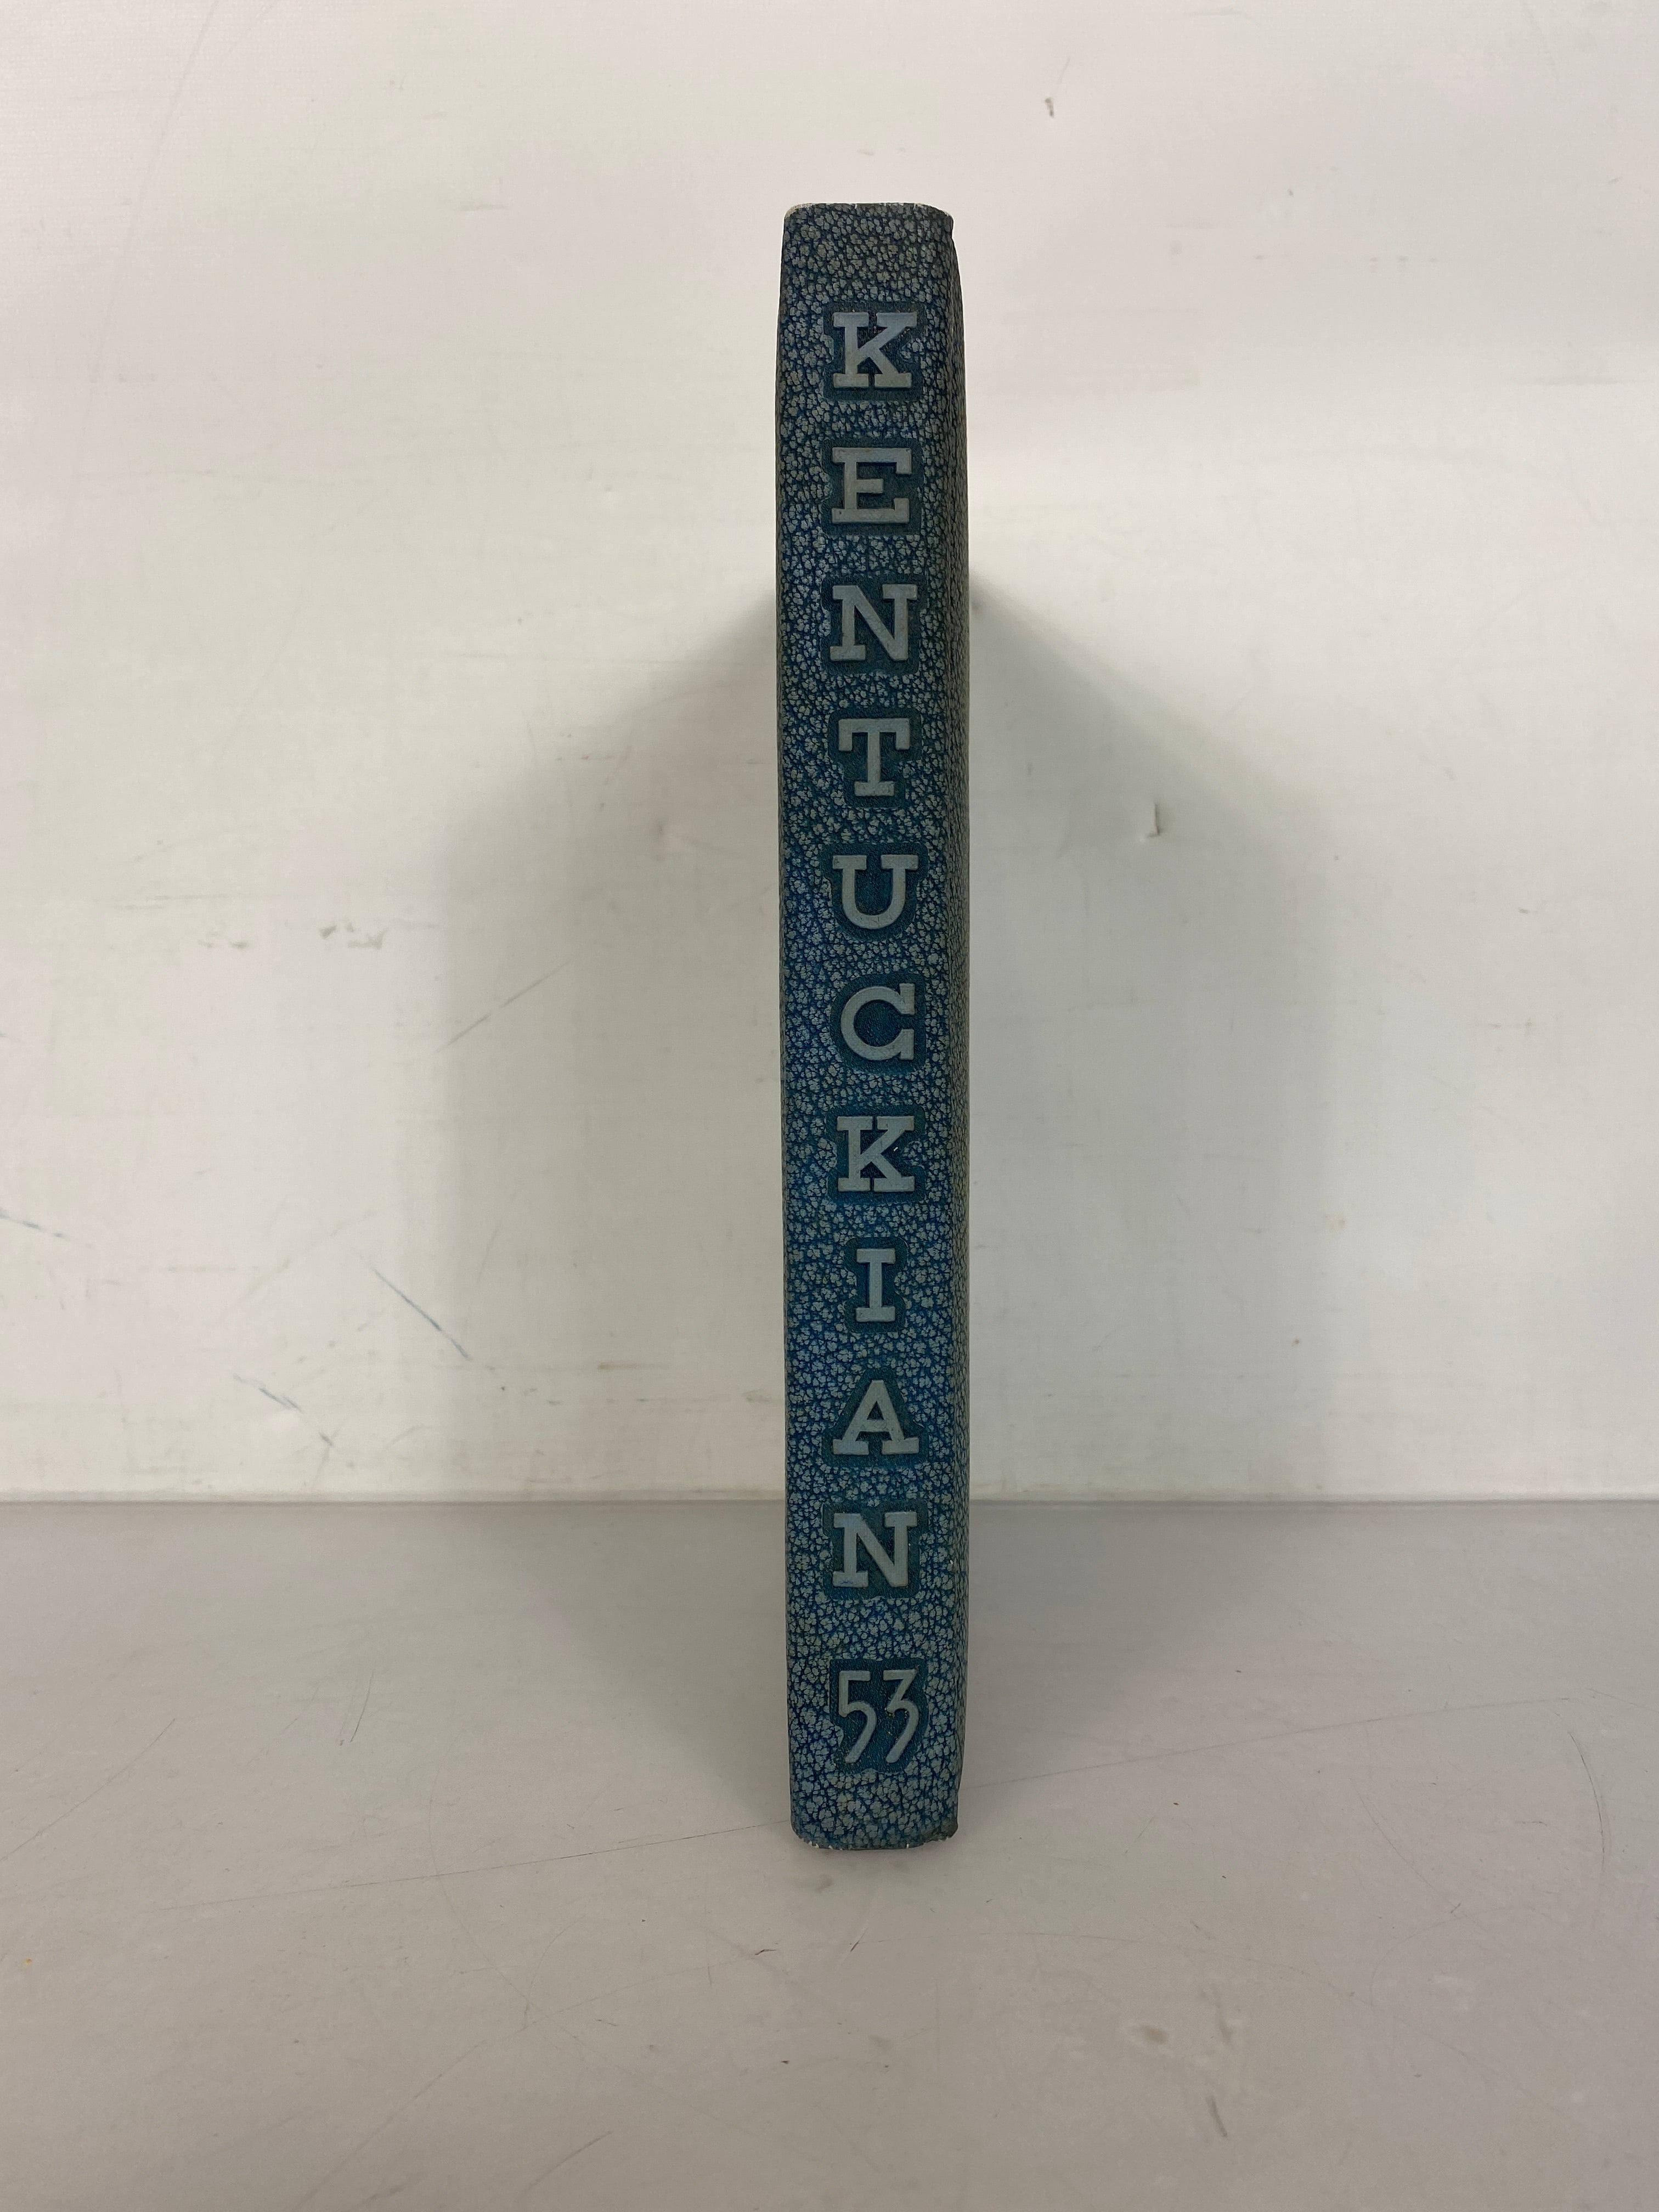 1953  University of Kentucky, "Kentuckian" Lexington Kentucky